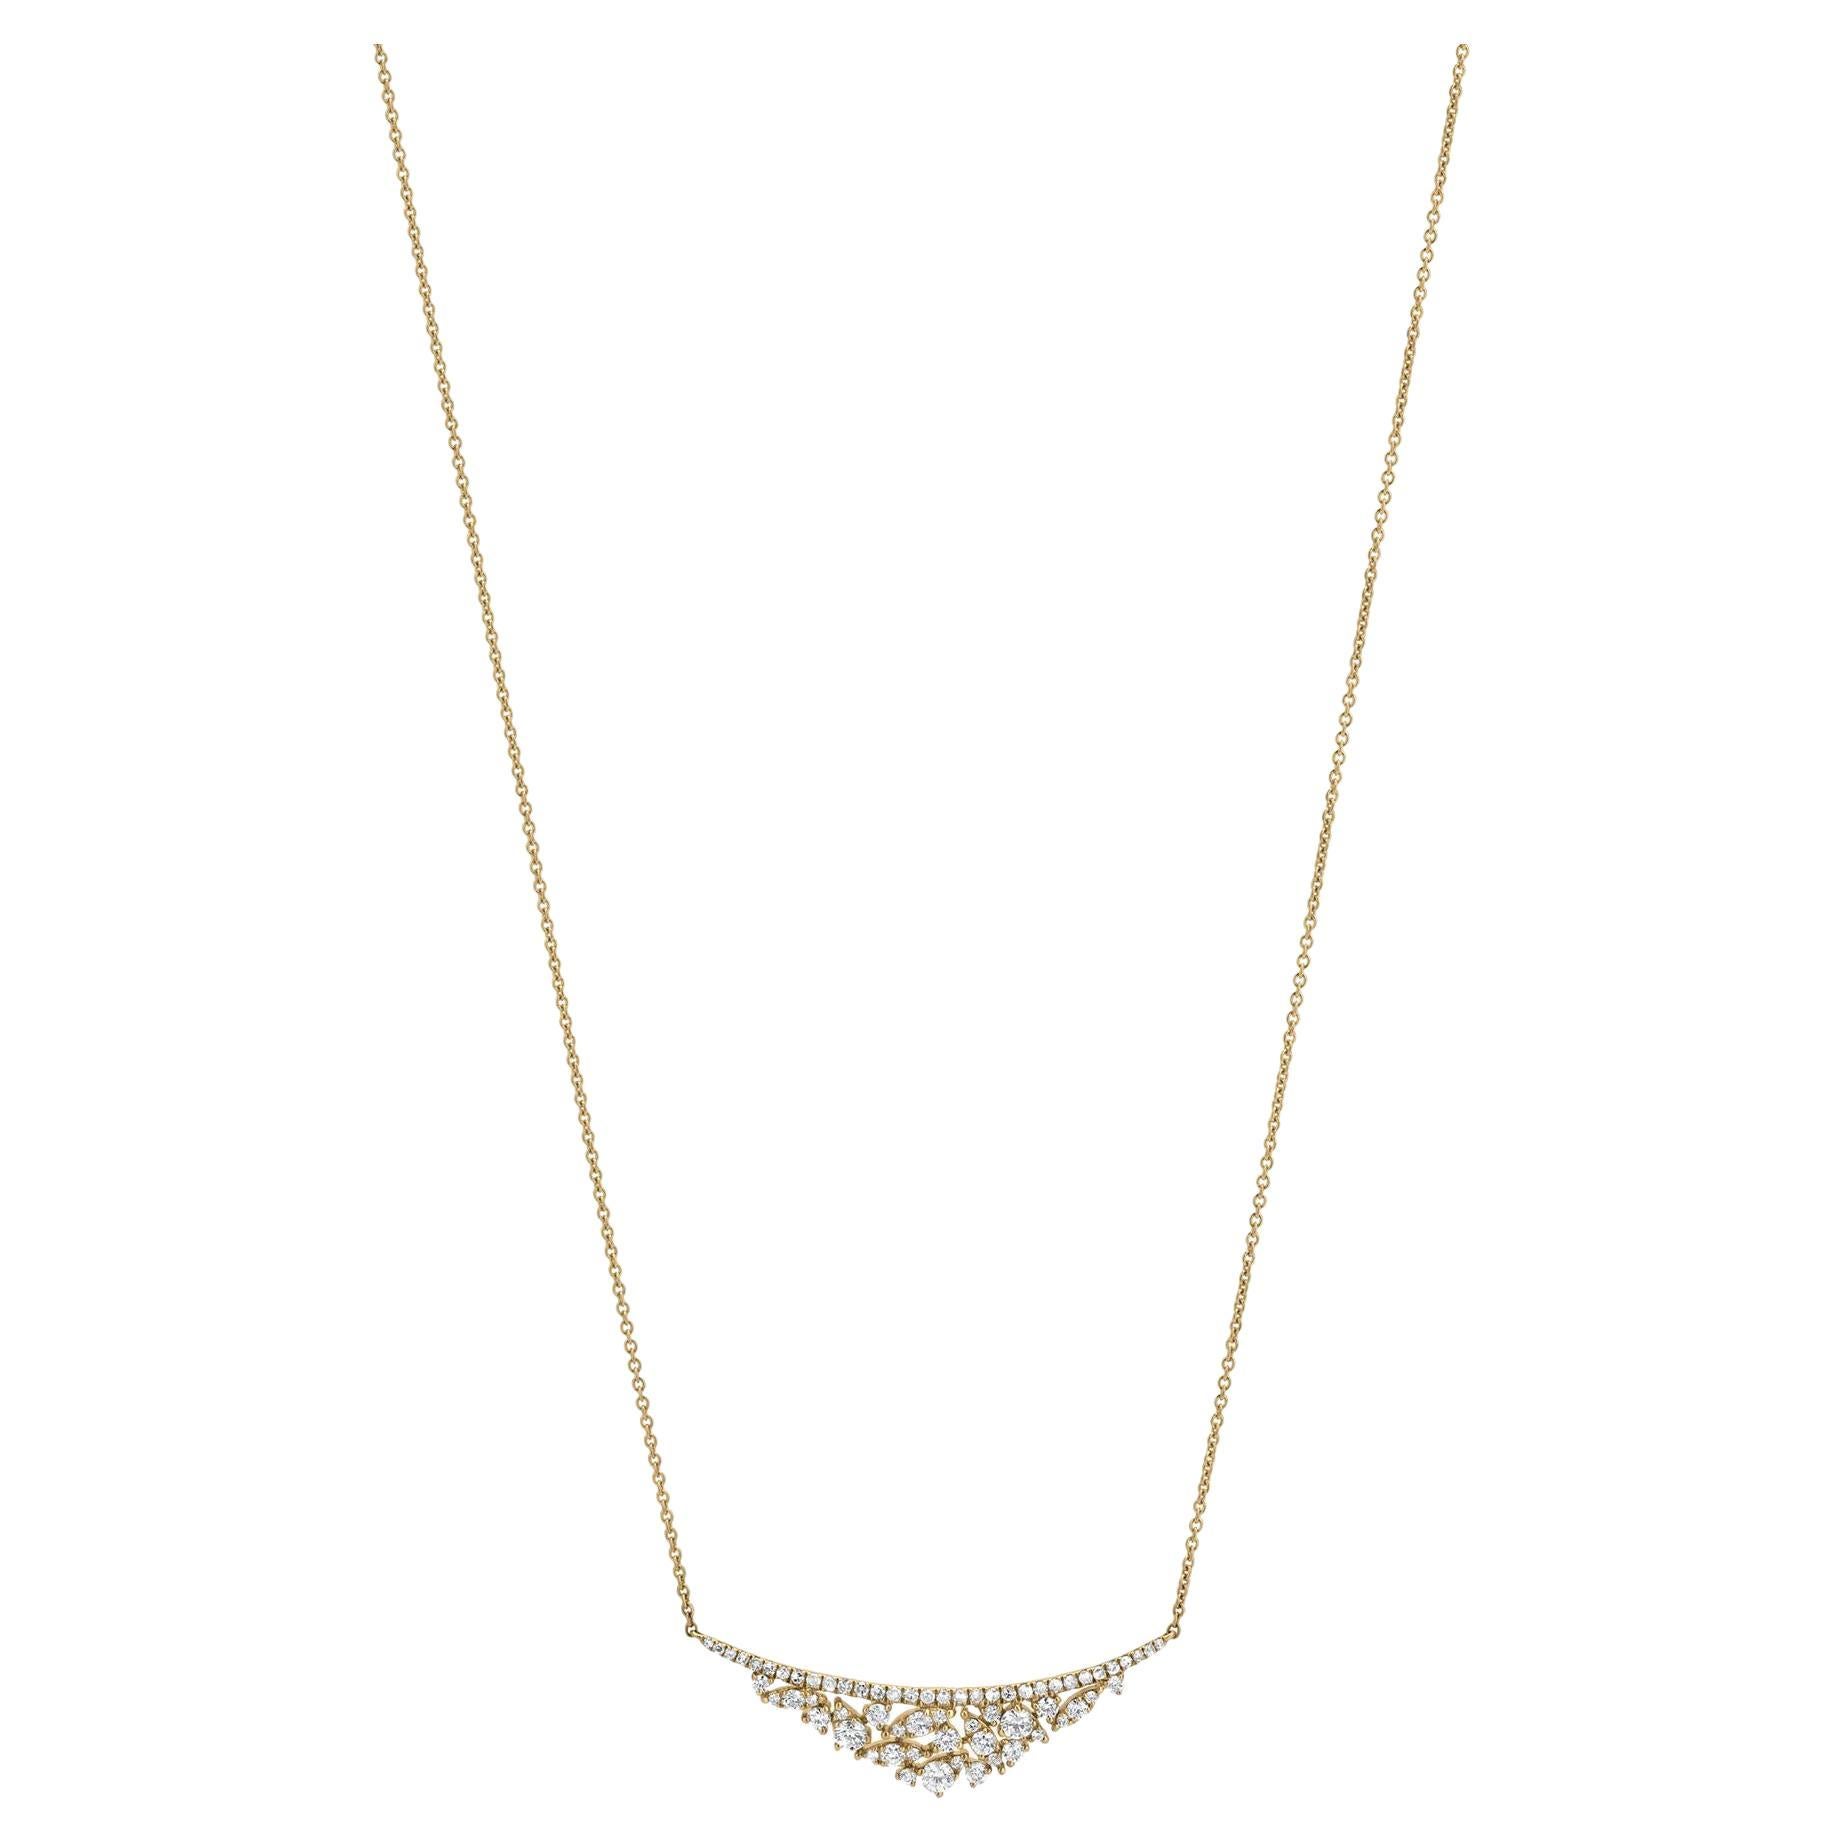 Luxle .83cttw. Diamond Bar Pendant Necklace in 18k Yellow Gold